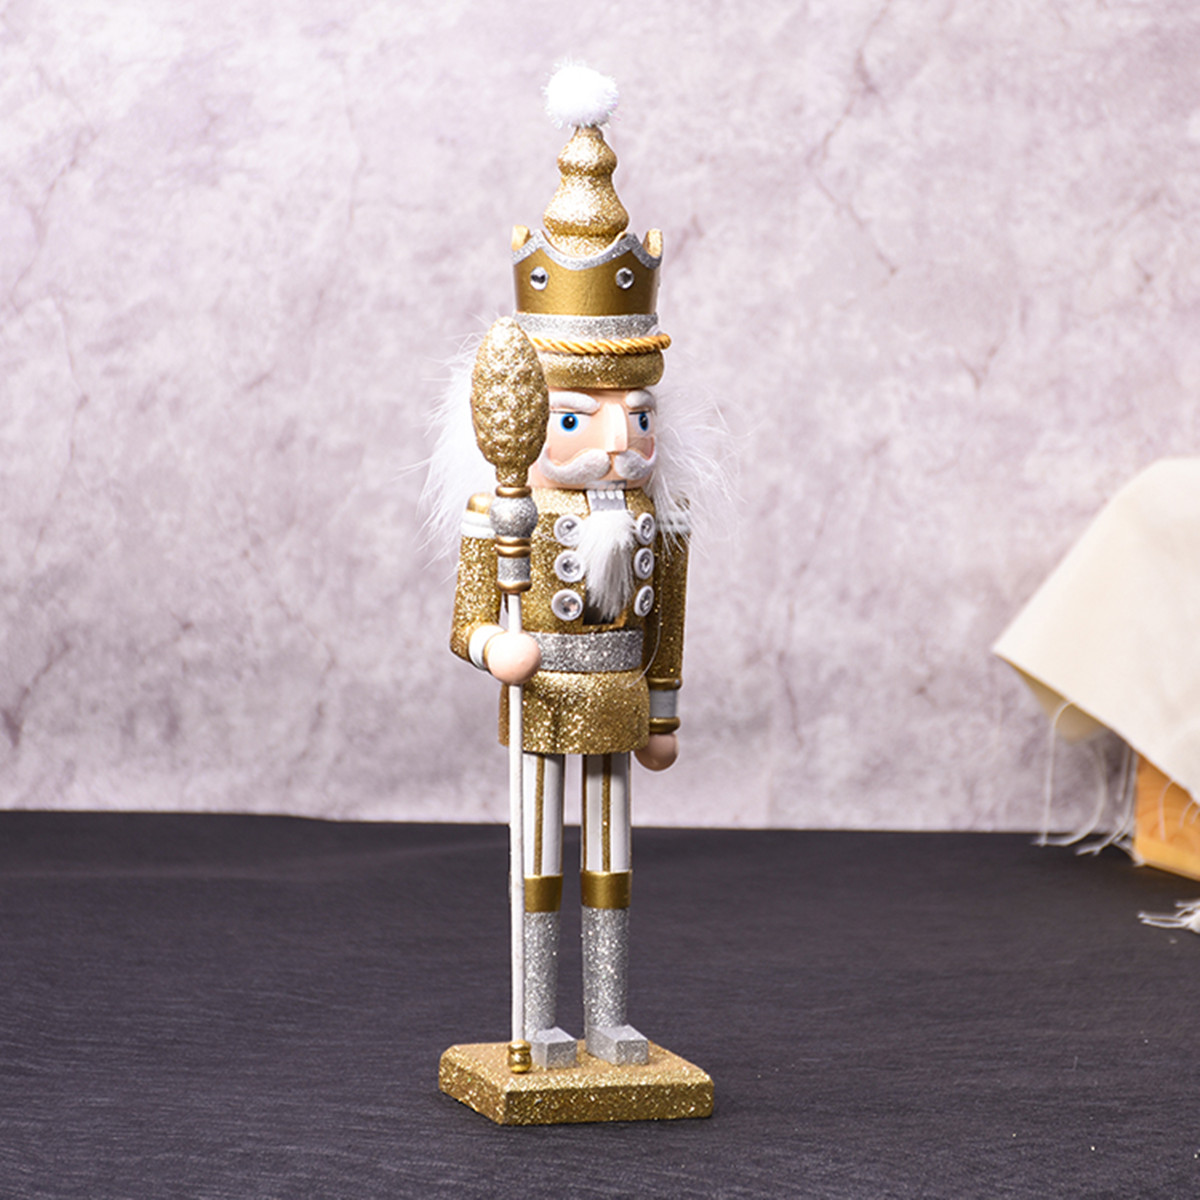 42cm-Wooden-Nutcracker-Doll-Soldier-Vintage-Handcraft-Decoration-Christmas-Action-Figure-Gifts-1386592-7